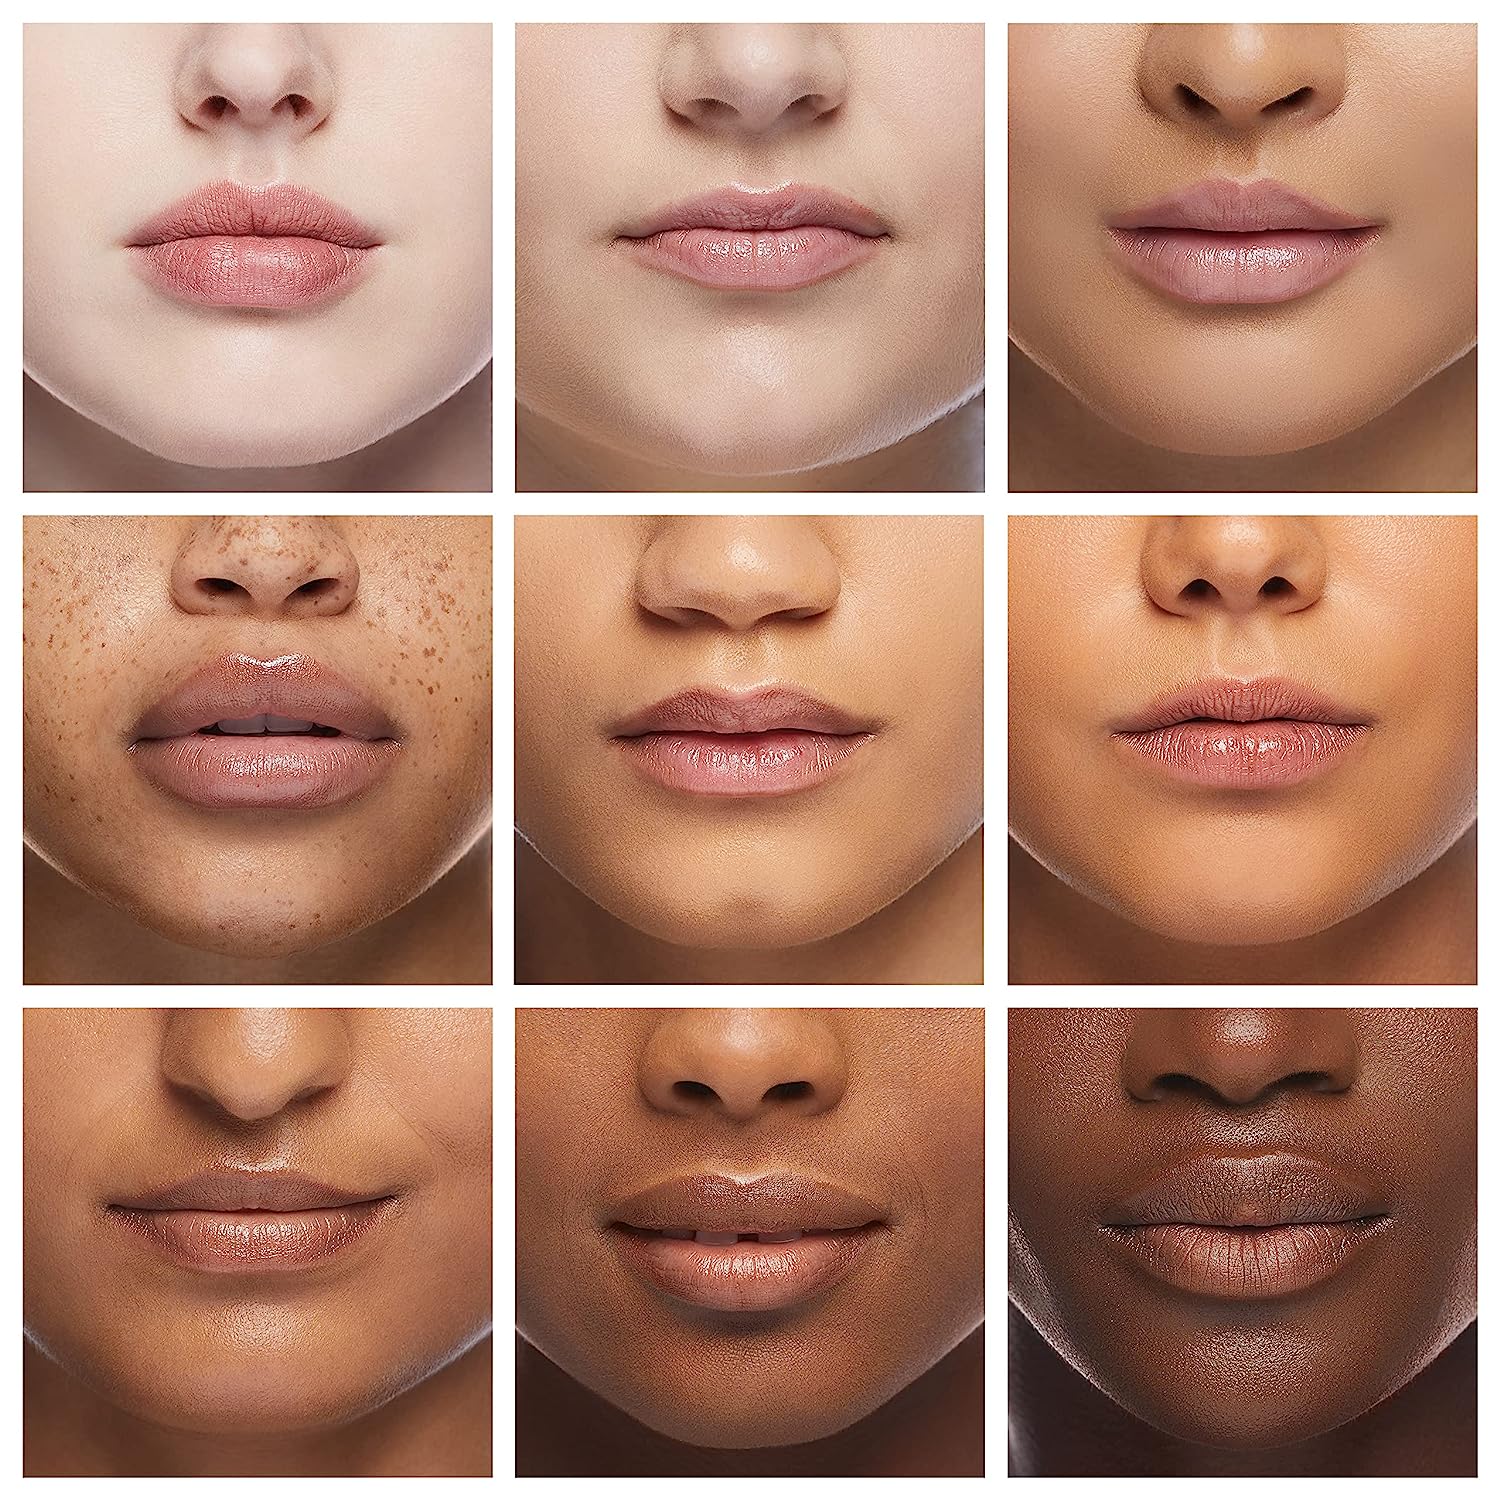 Natural Lip Balm on Woman's Lips